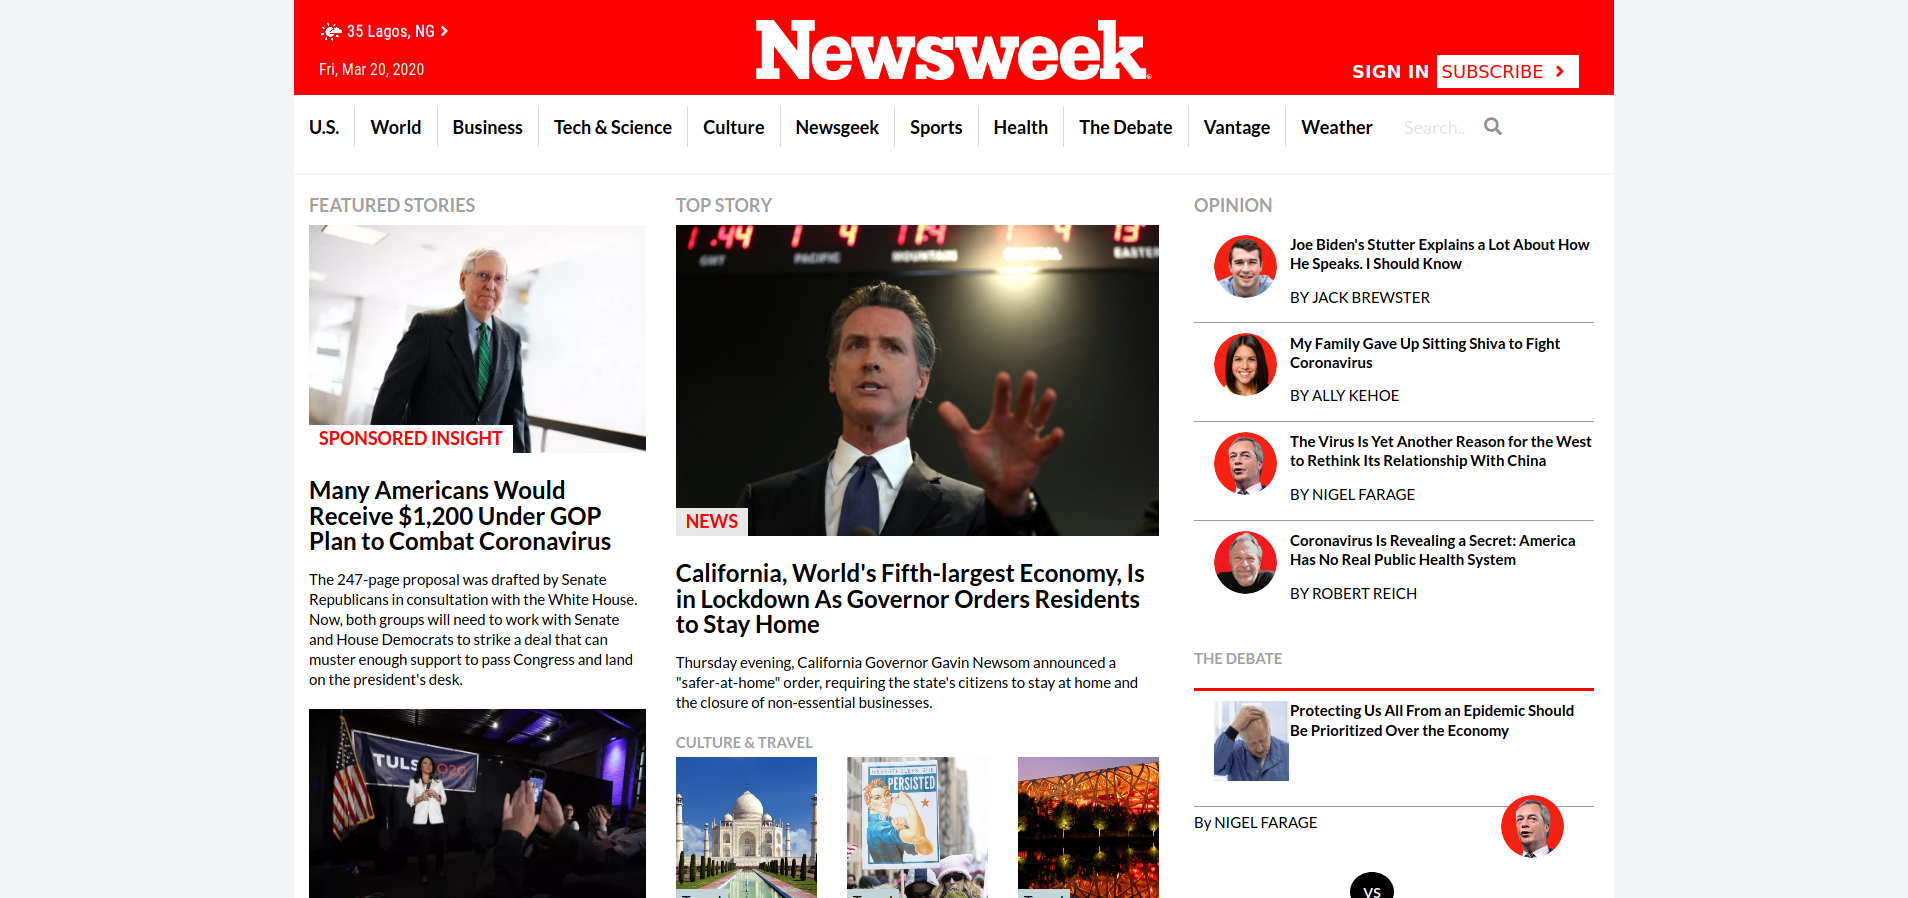 Newsweekclone-desktop-view.png